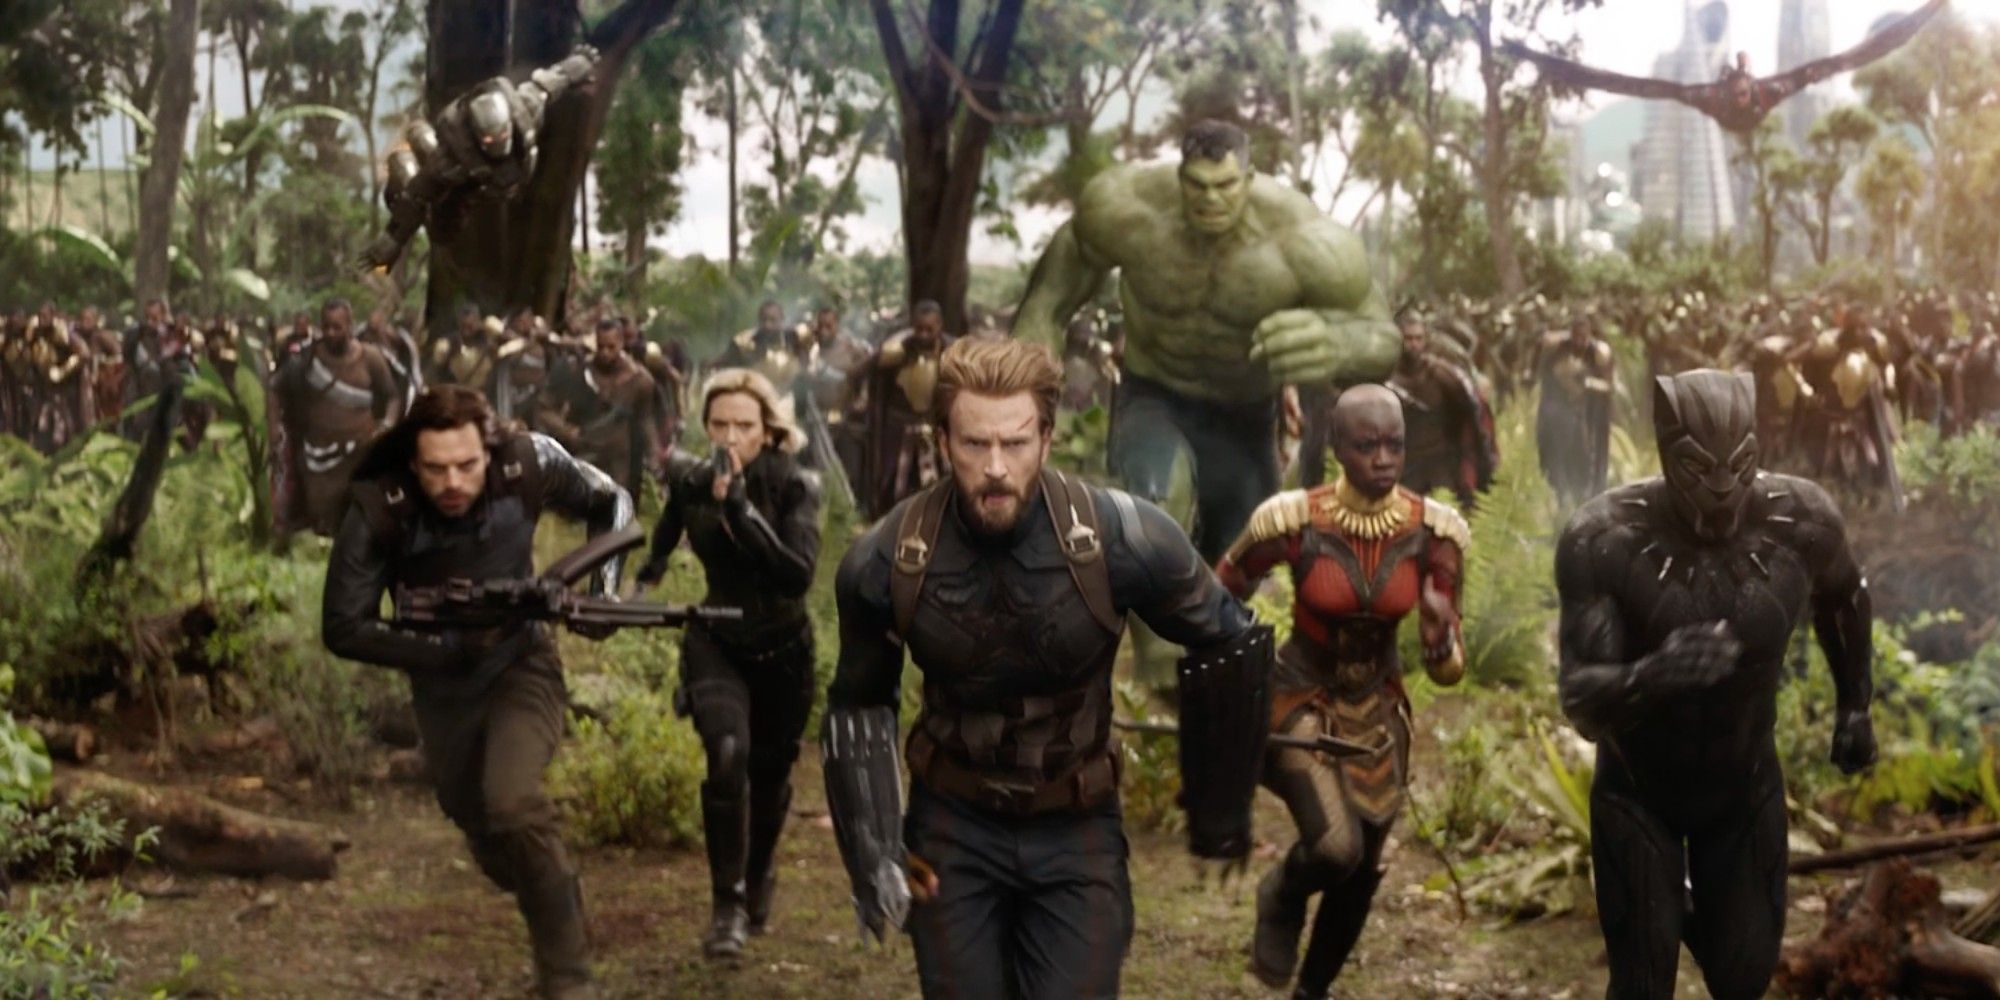 The Avengers running towards the camera in an Infinity War trailer shot.